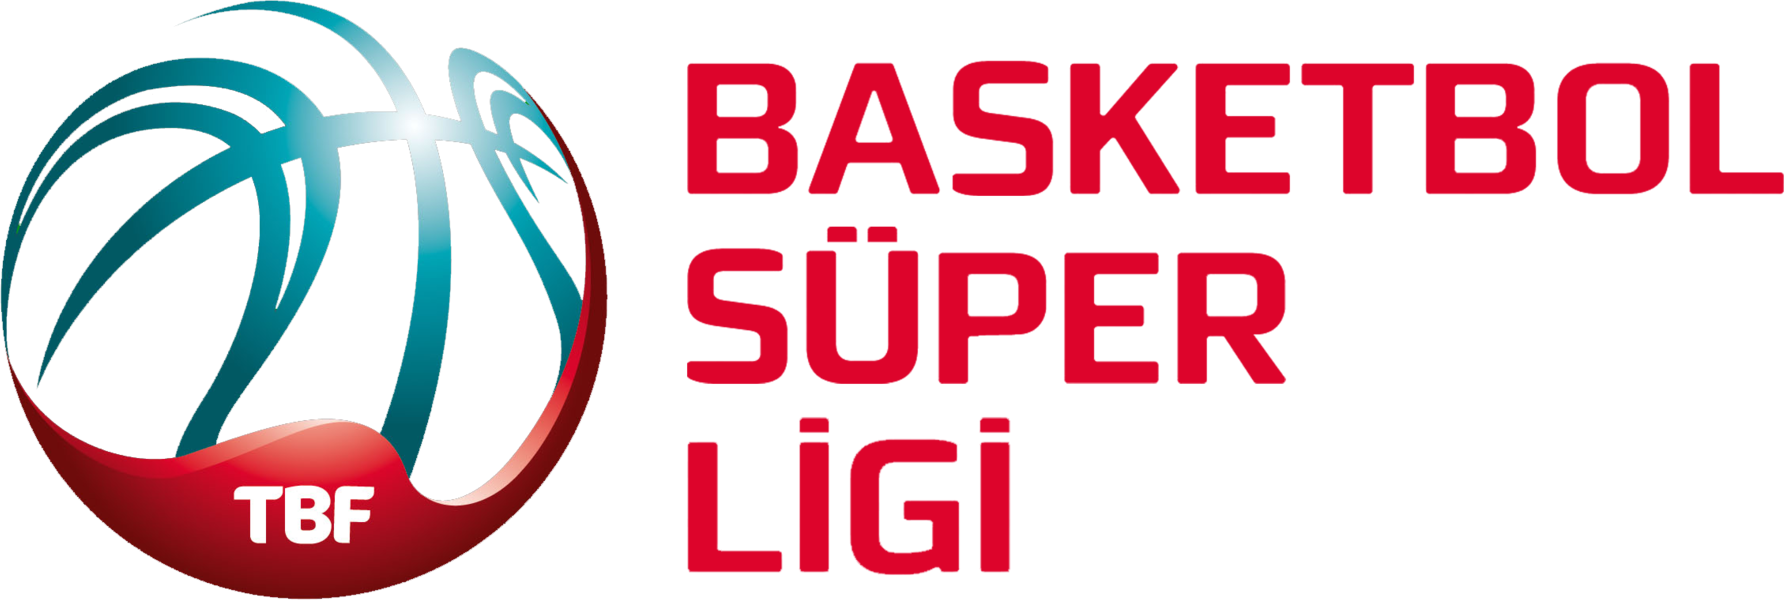 Turkey Basketball Super Ligi